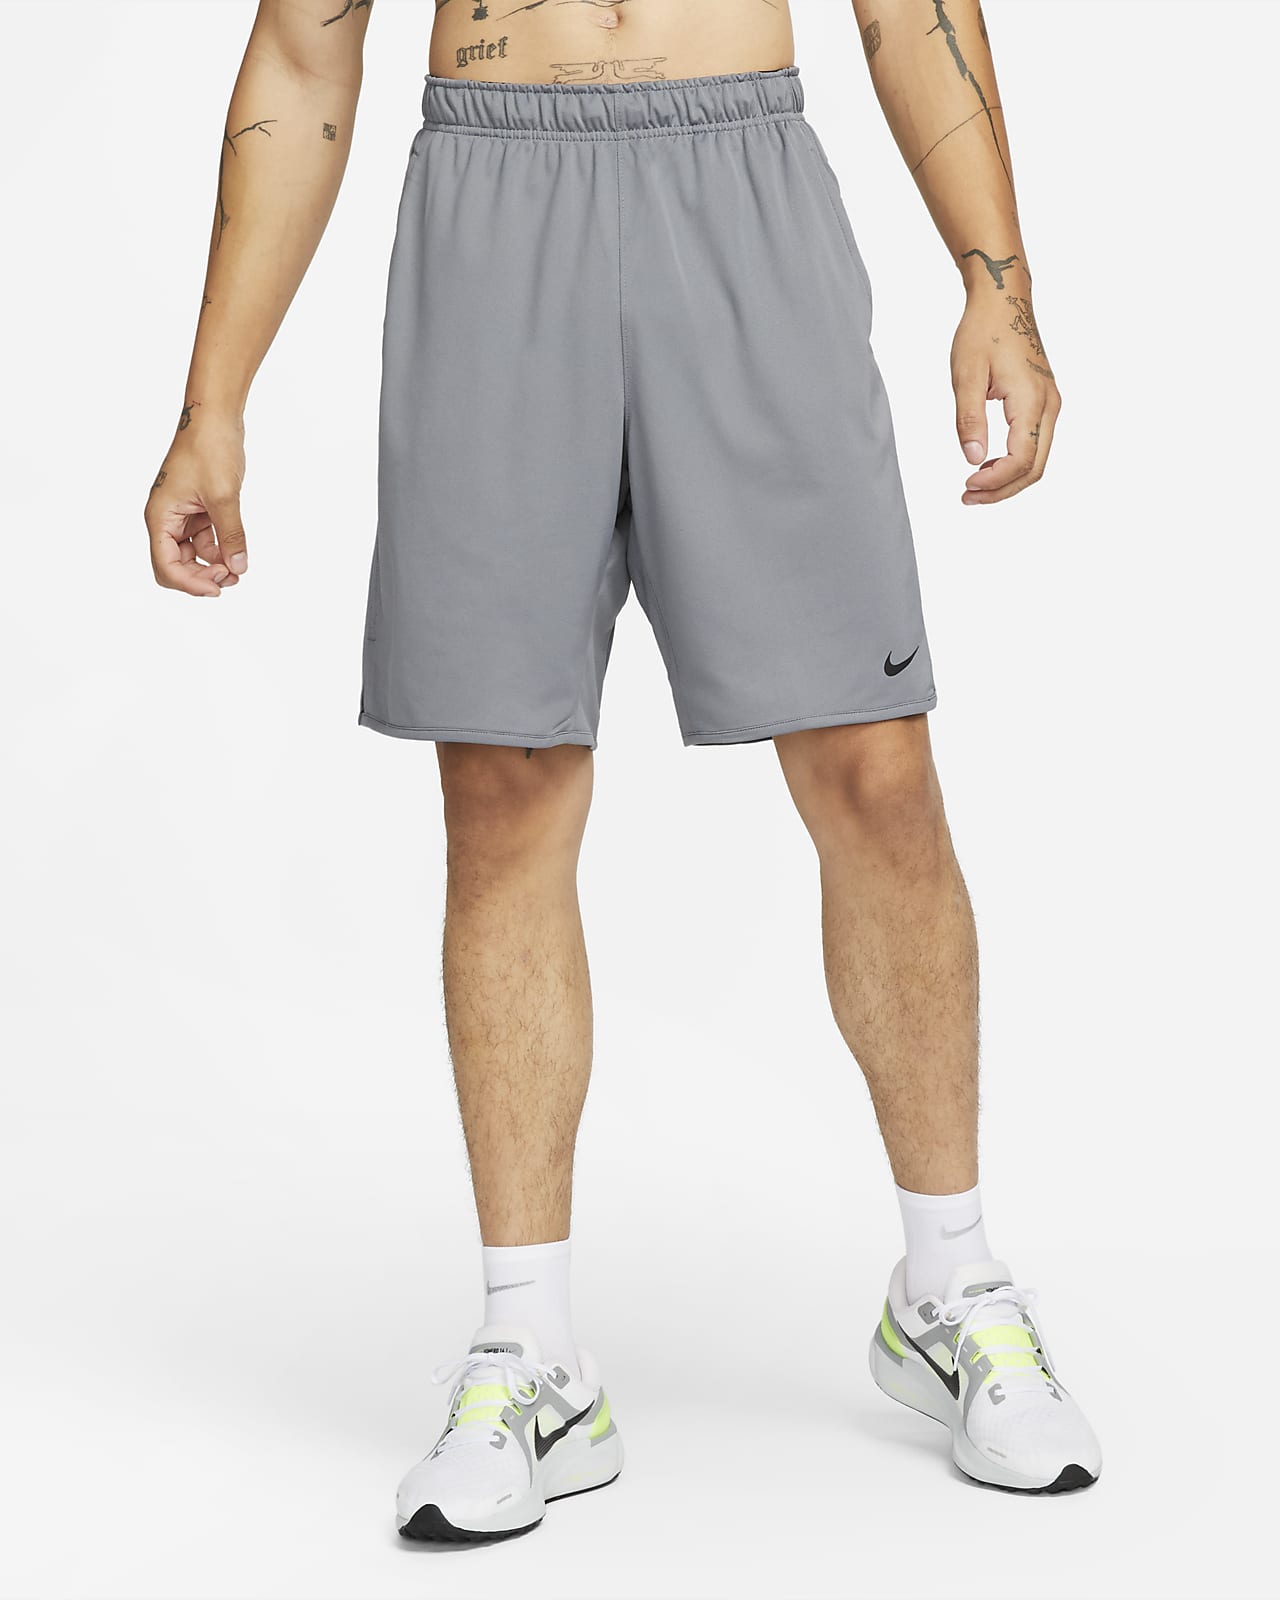 Calígrafo preposición adecuado Nike Totality Pantalón corto versátil Dri-FIT de 23 cm sin forro - Hombre.  Nike ES